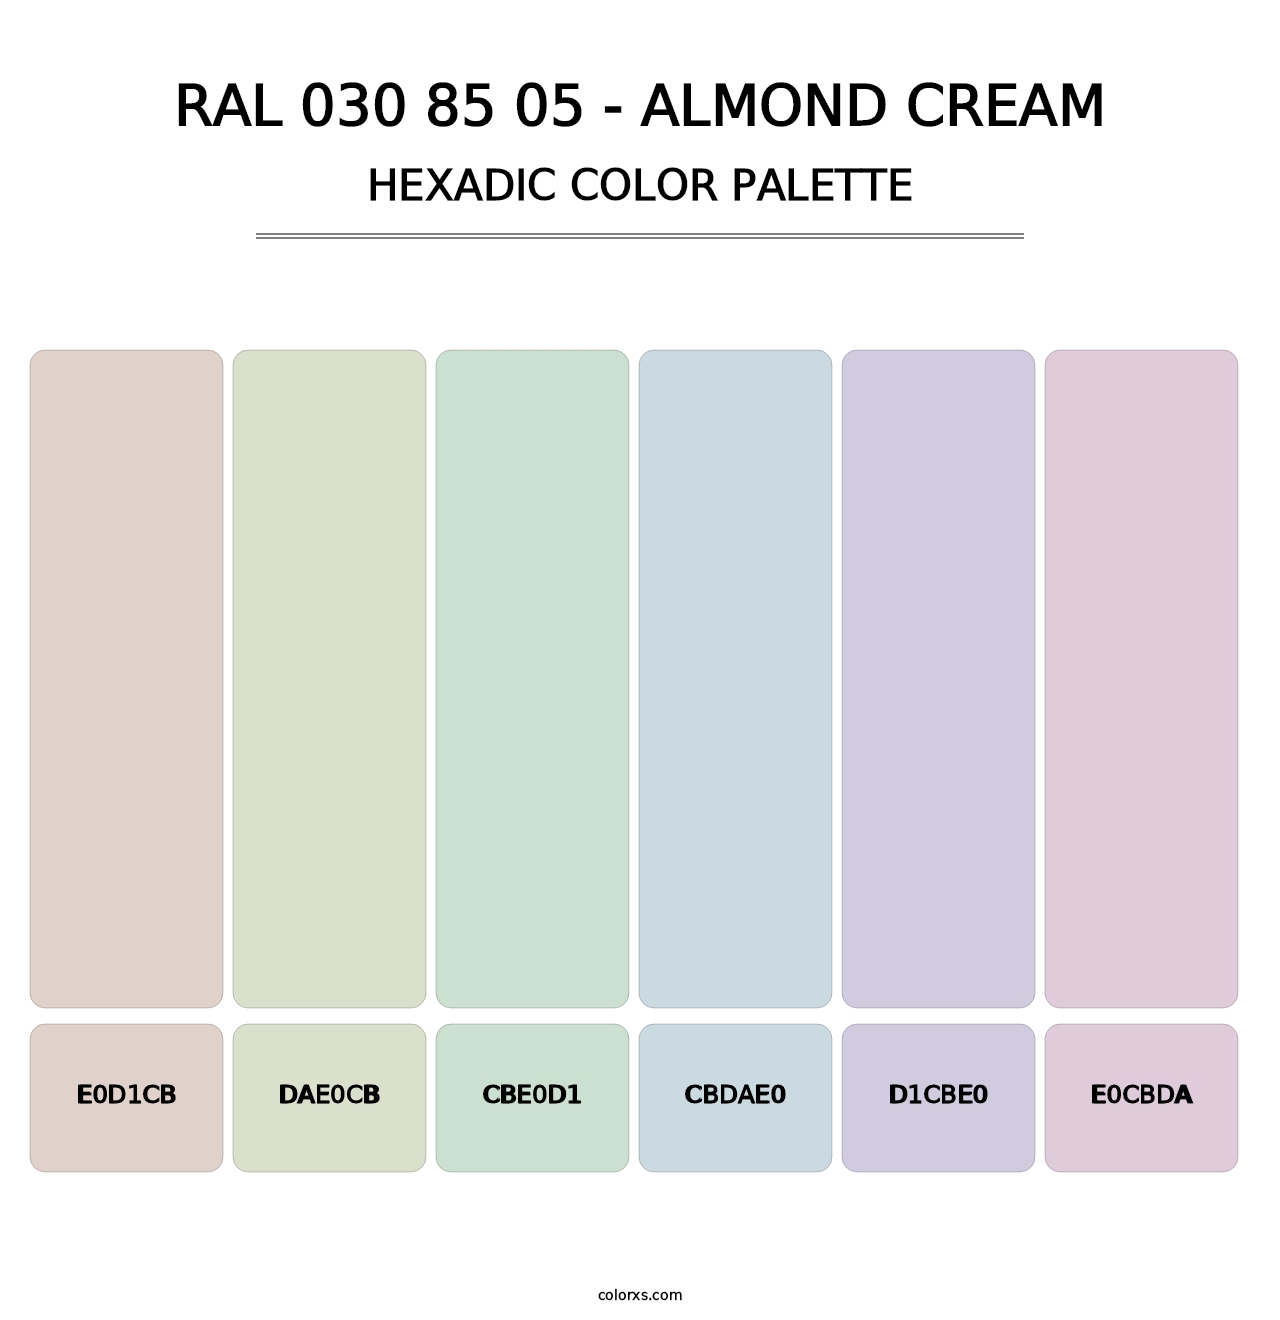 RAL 030 85 05 - Almond Cream - Hexadic Color Palette